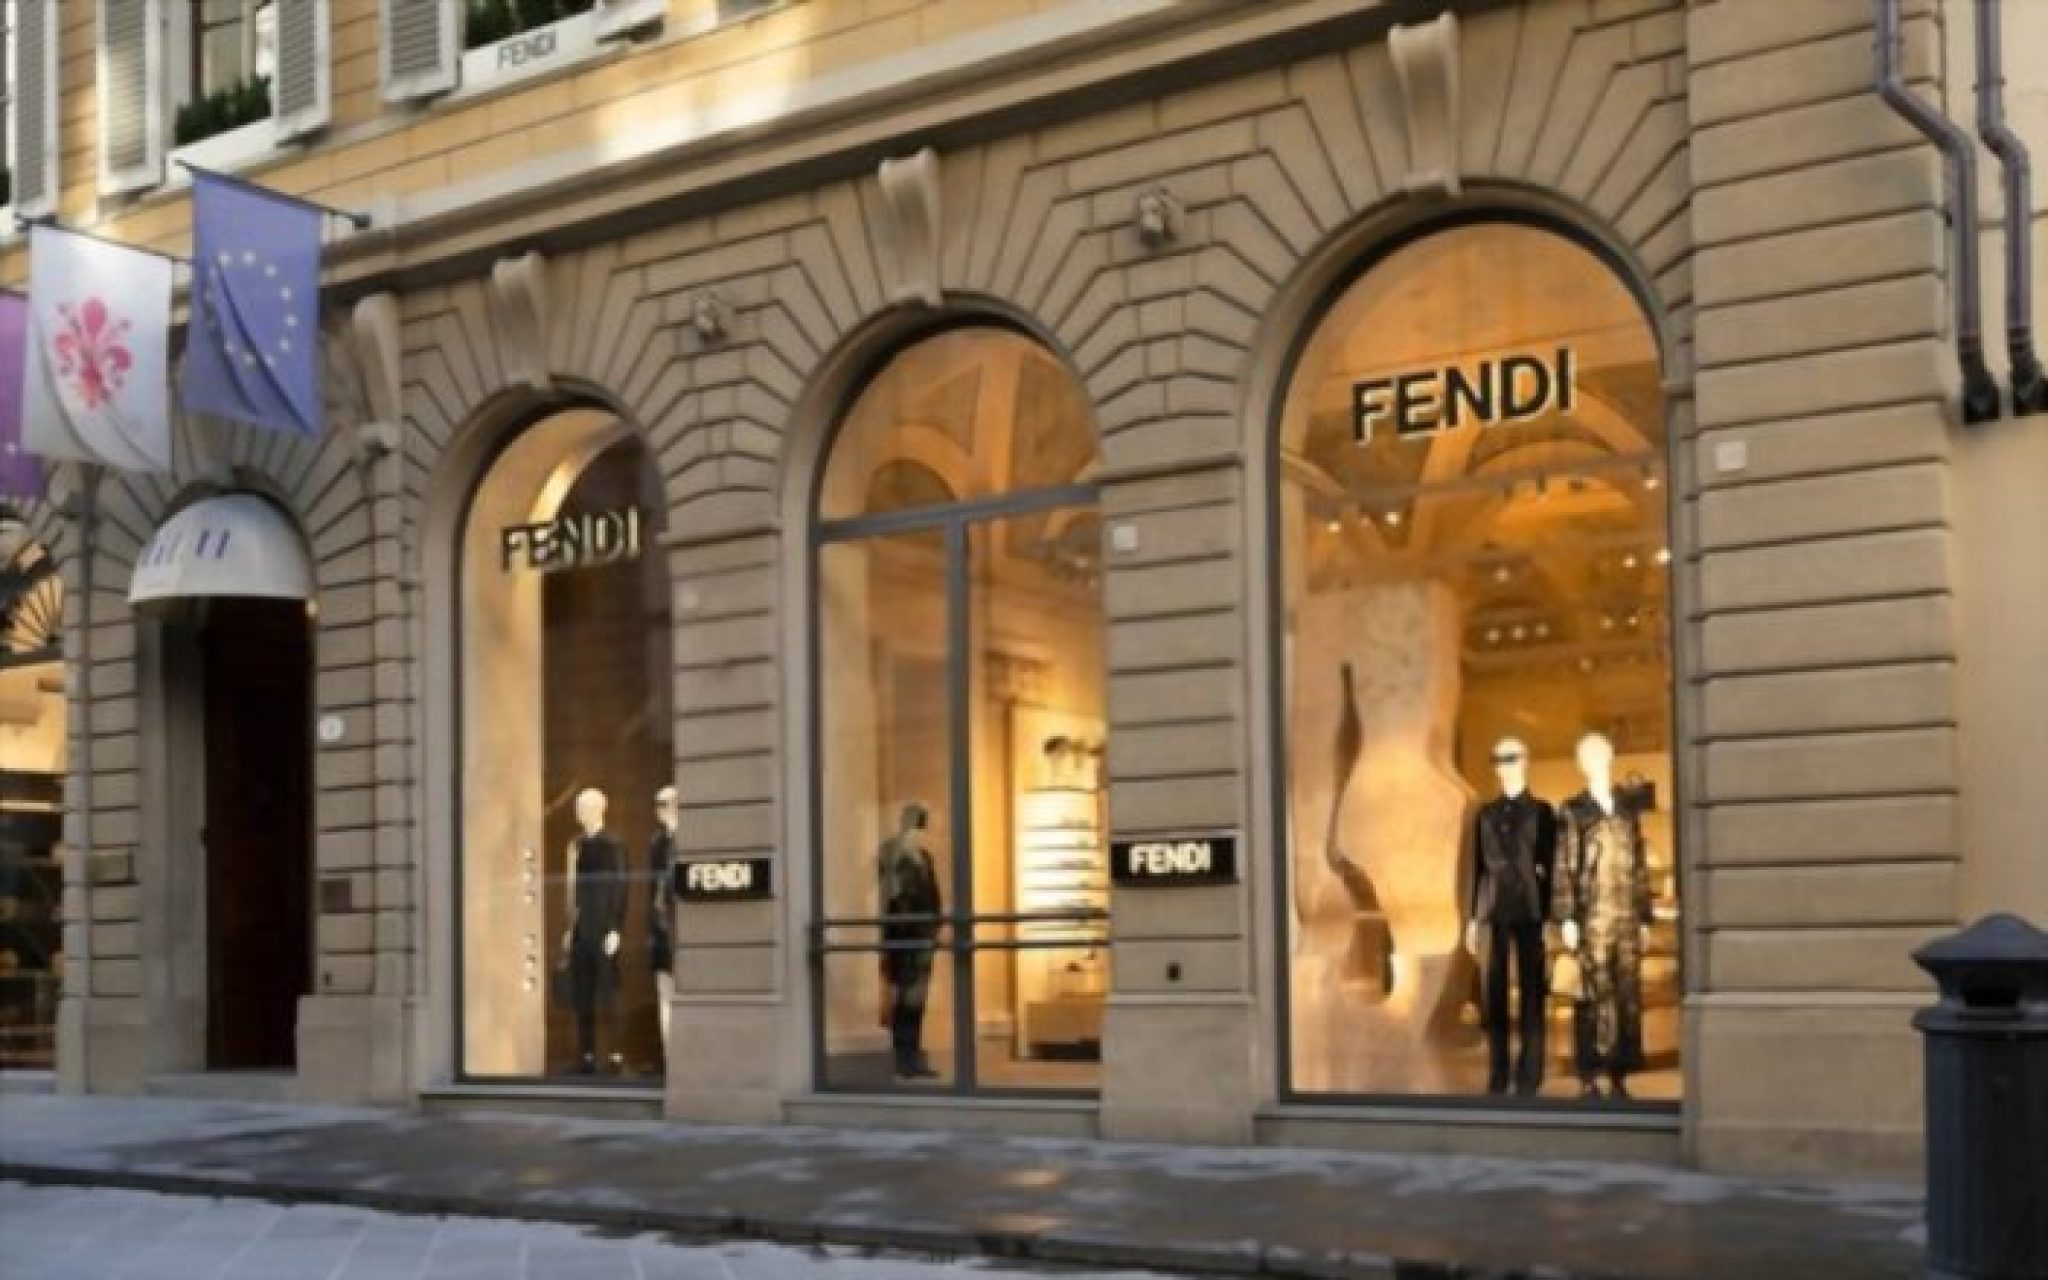 Fendi Shoe Size Chart Is Fendi Italian Sizing? The Shoe Box NYC